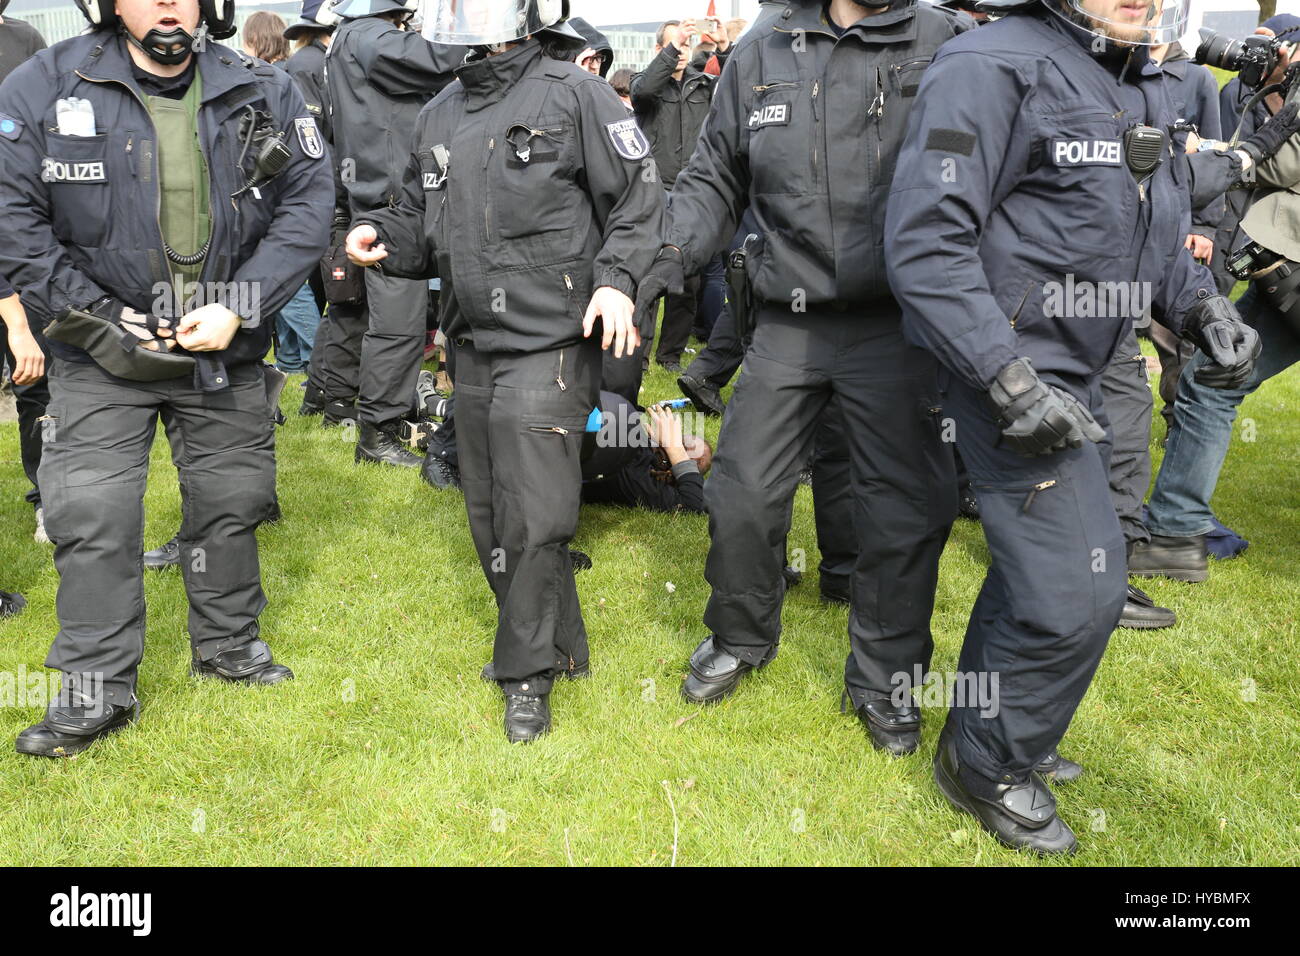 Berlin, Gemany, May 9th, 2015: Antifa protest against Pegida. Stock Photo